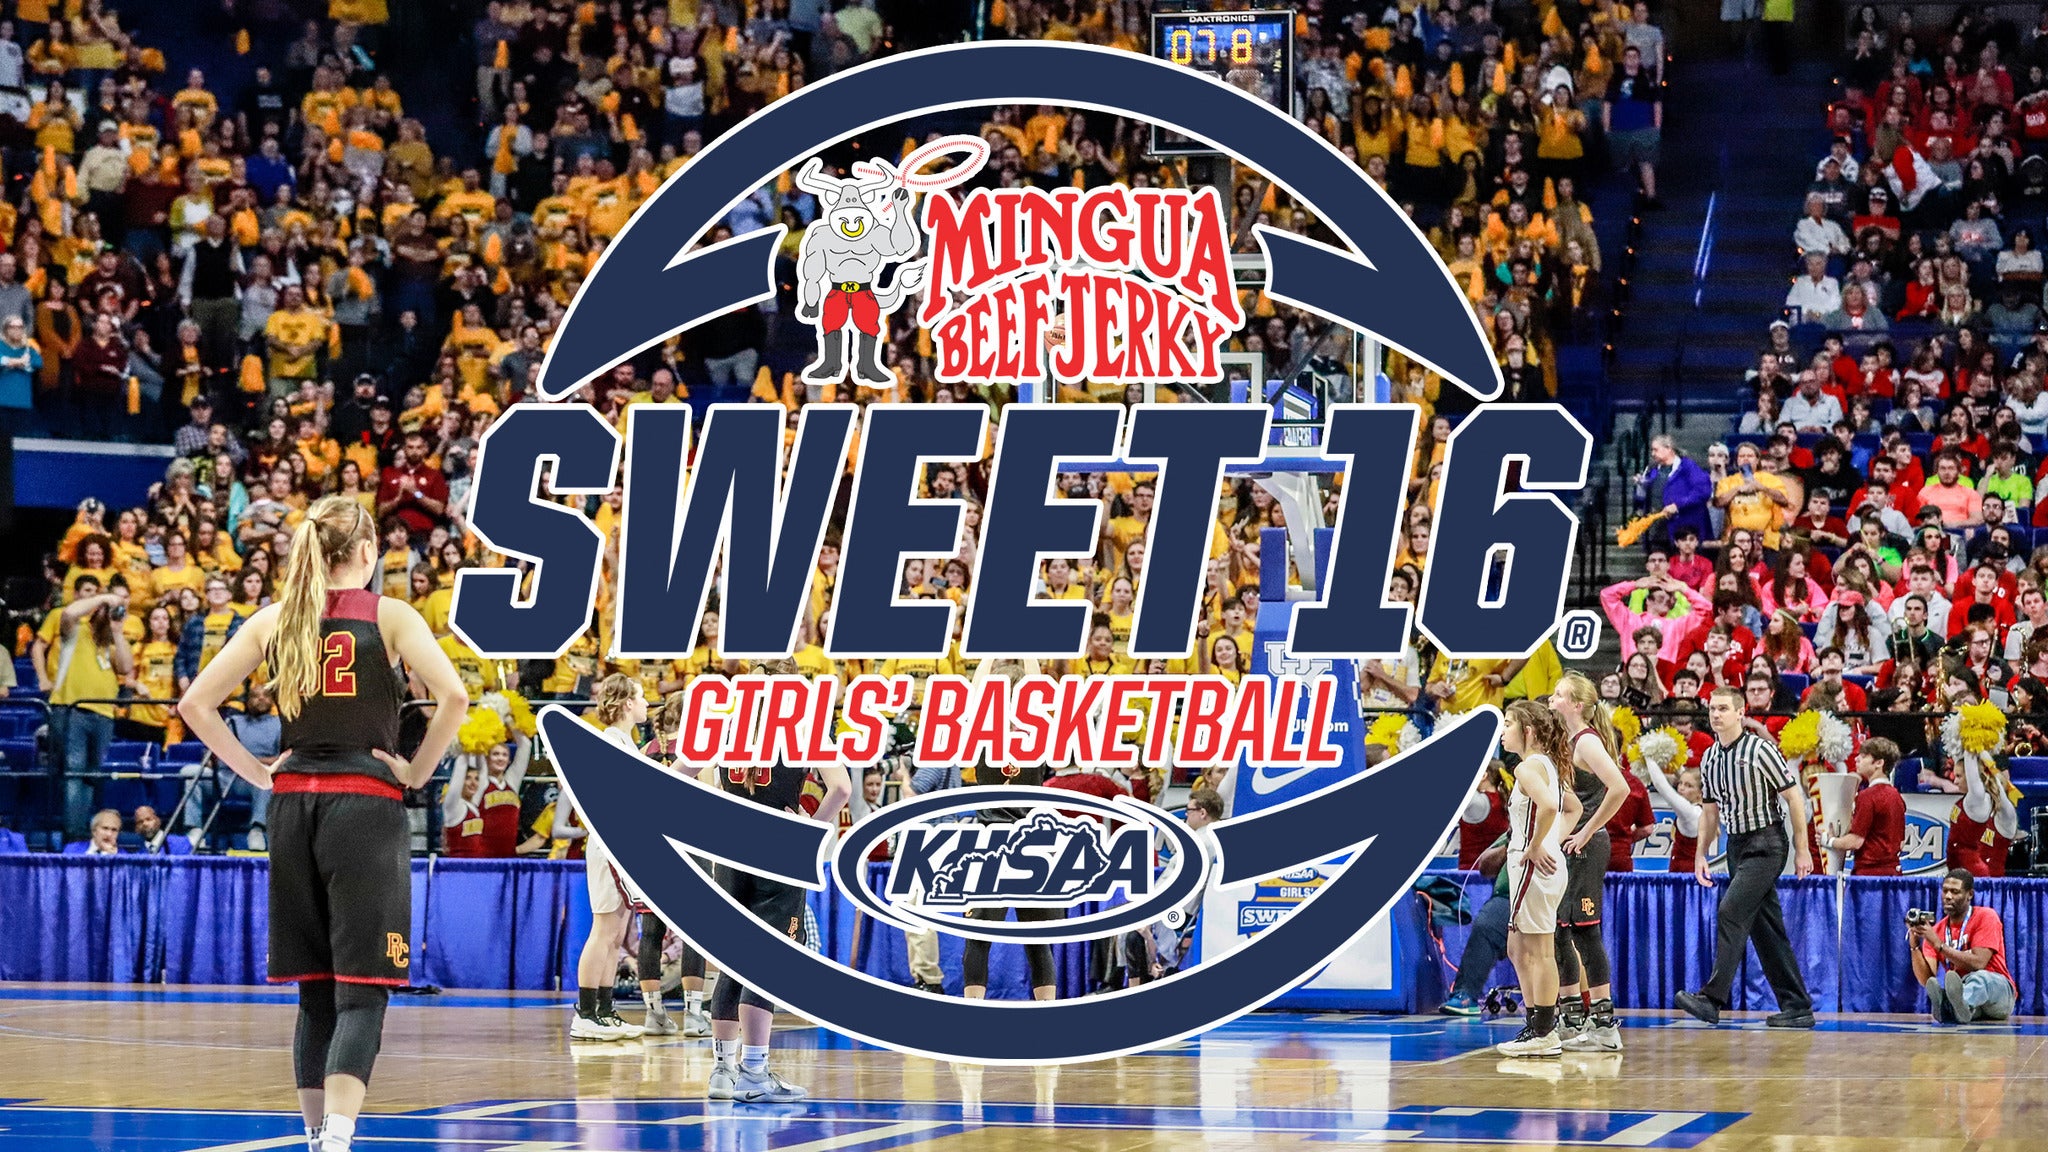 KHSAA Sweet 16 Girls Basketball Tournament Tickets Single Game Tickets & Schedule